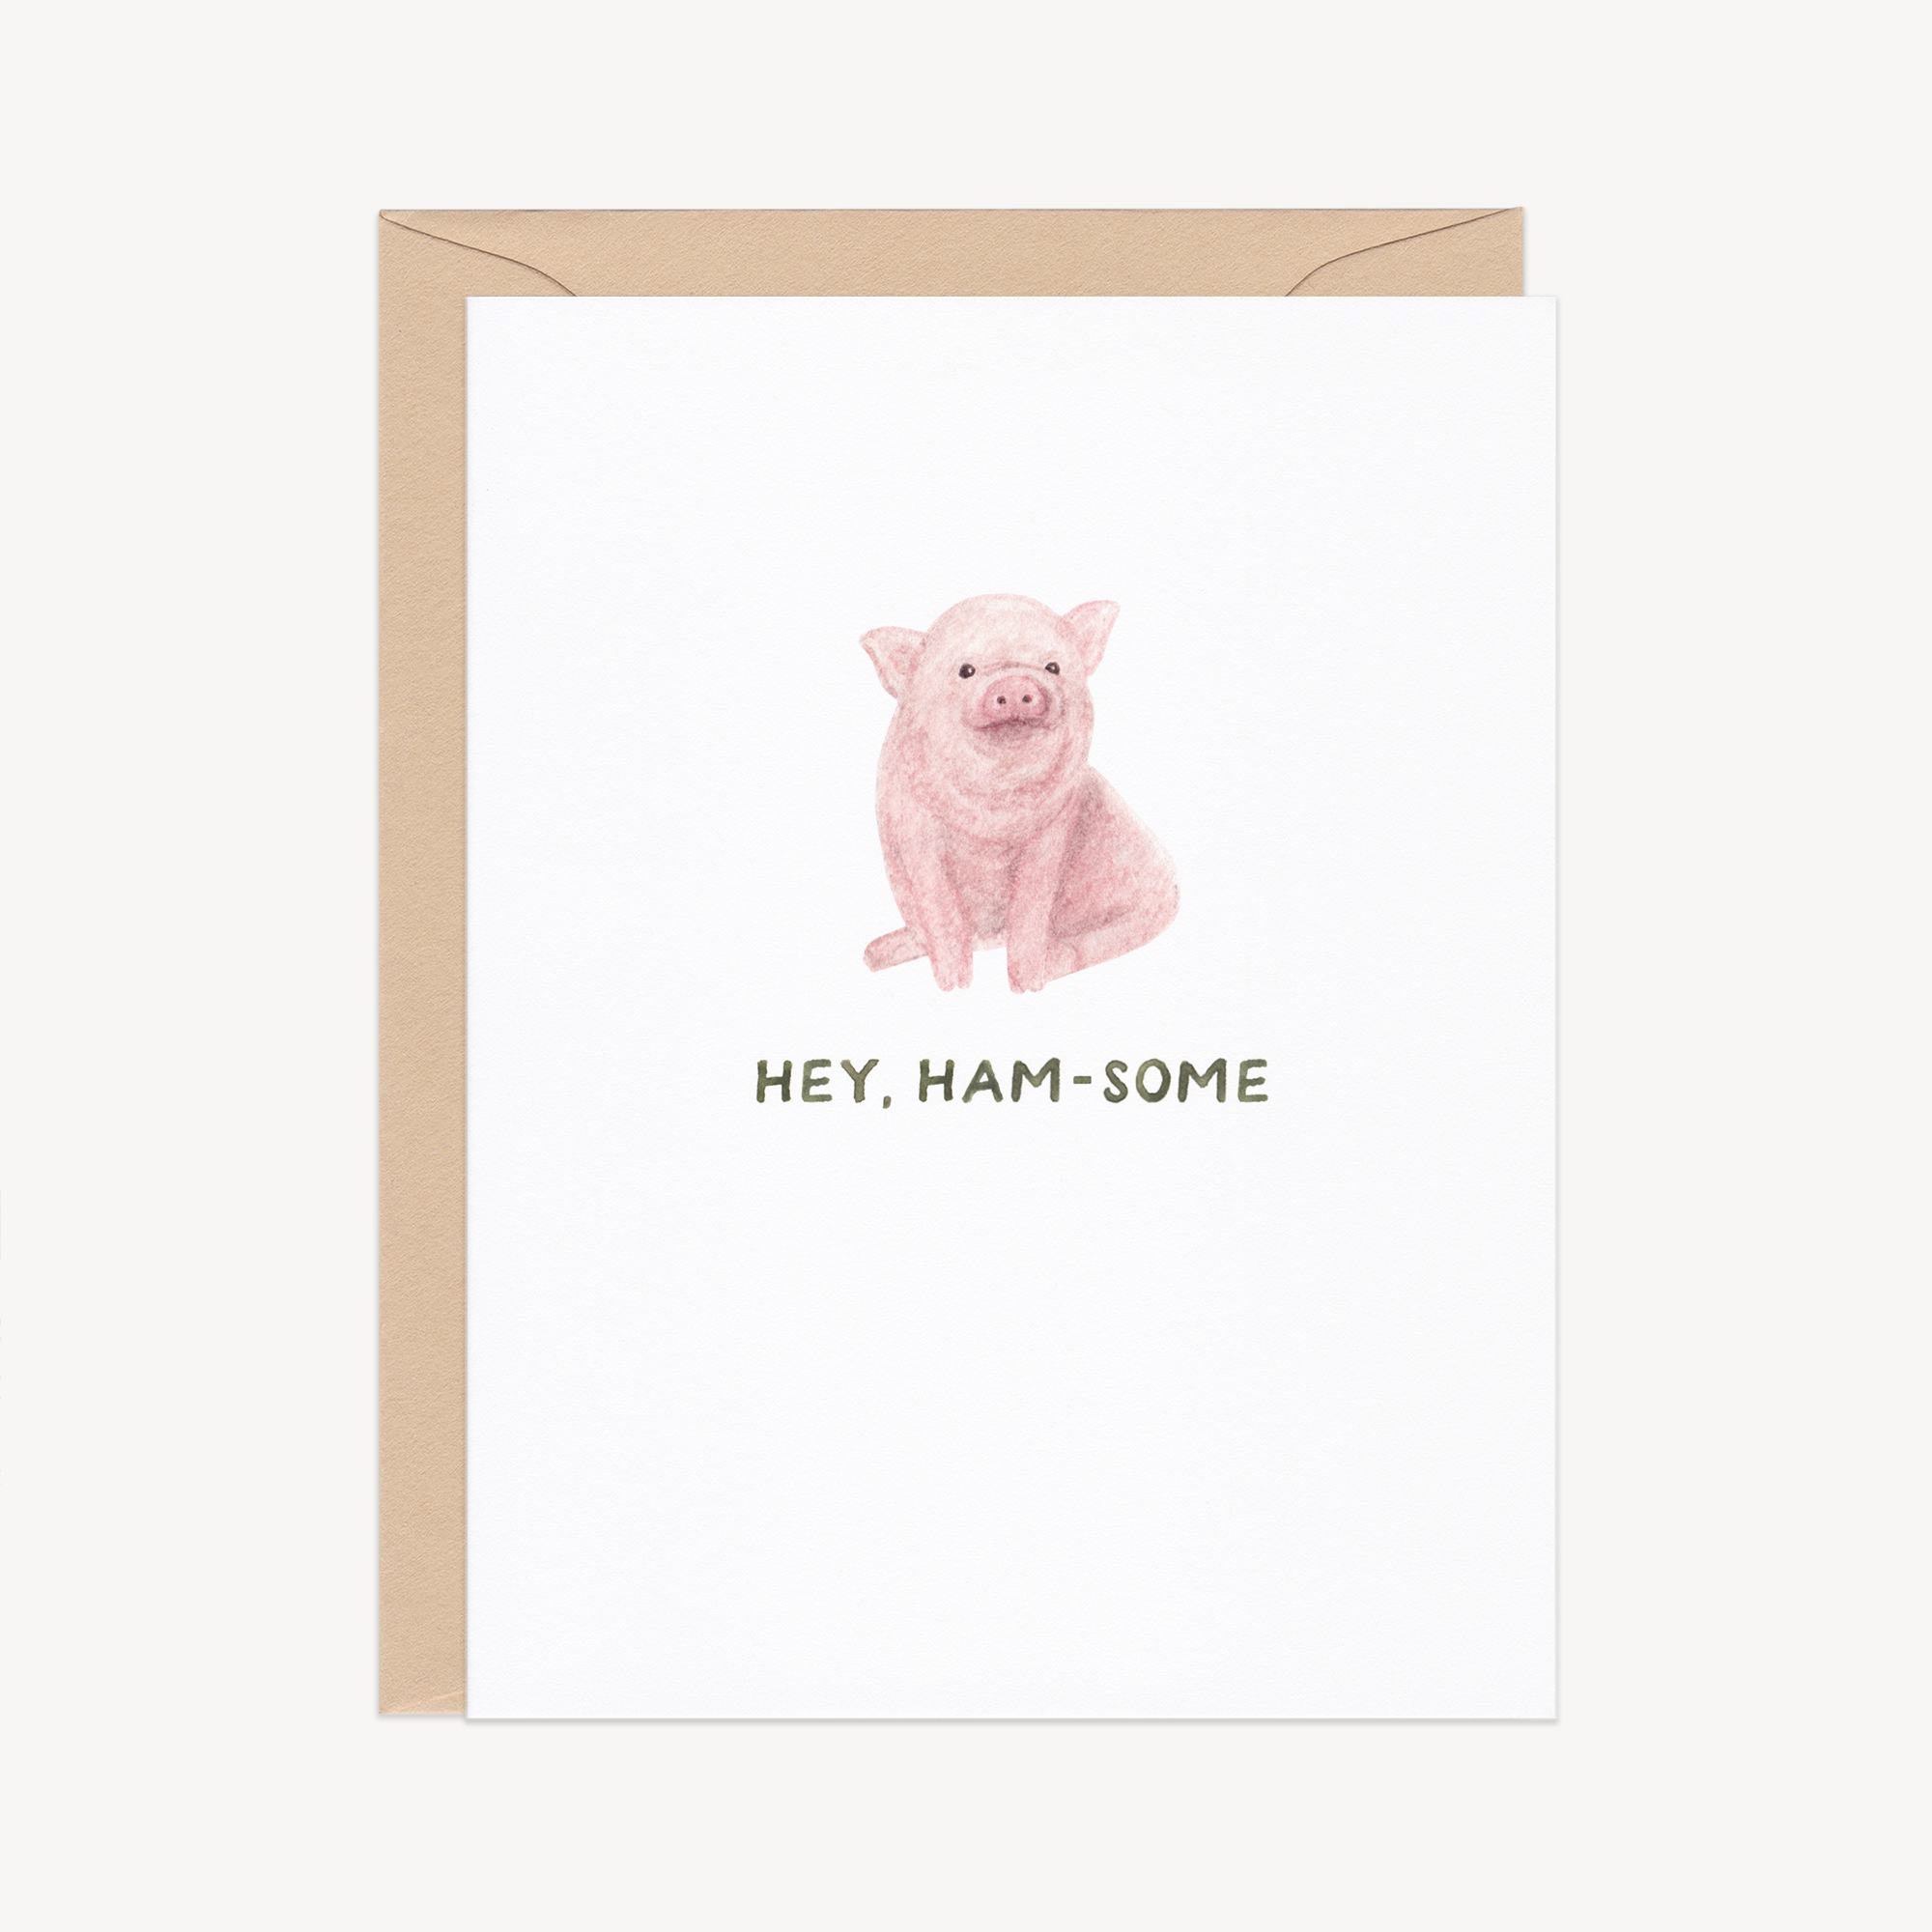 Hey, Ham-some Love / Anniversary Card